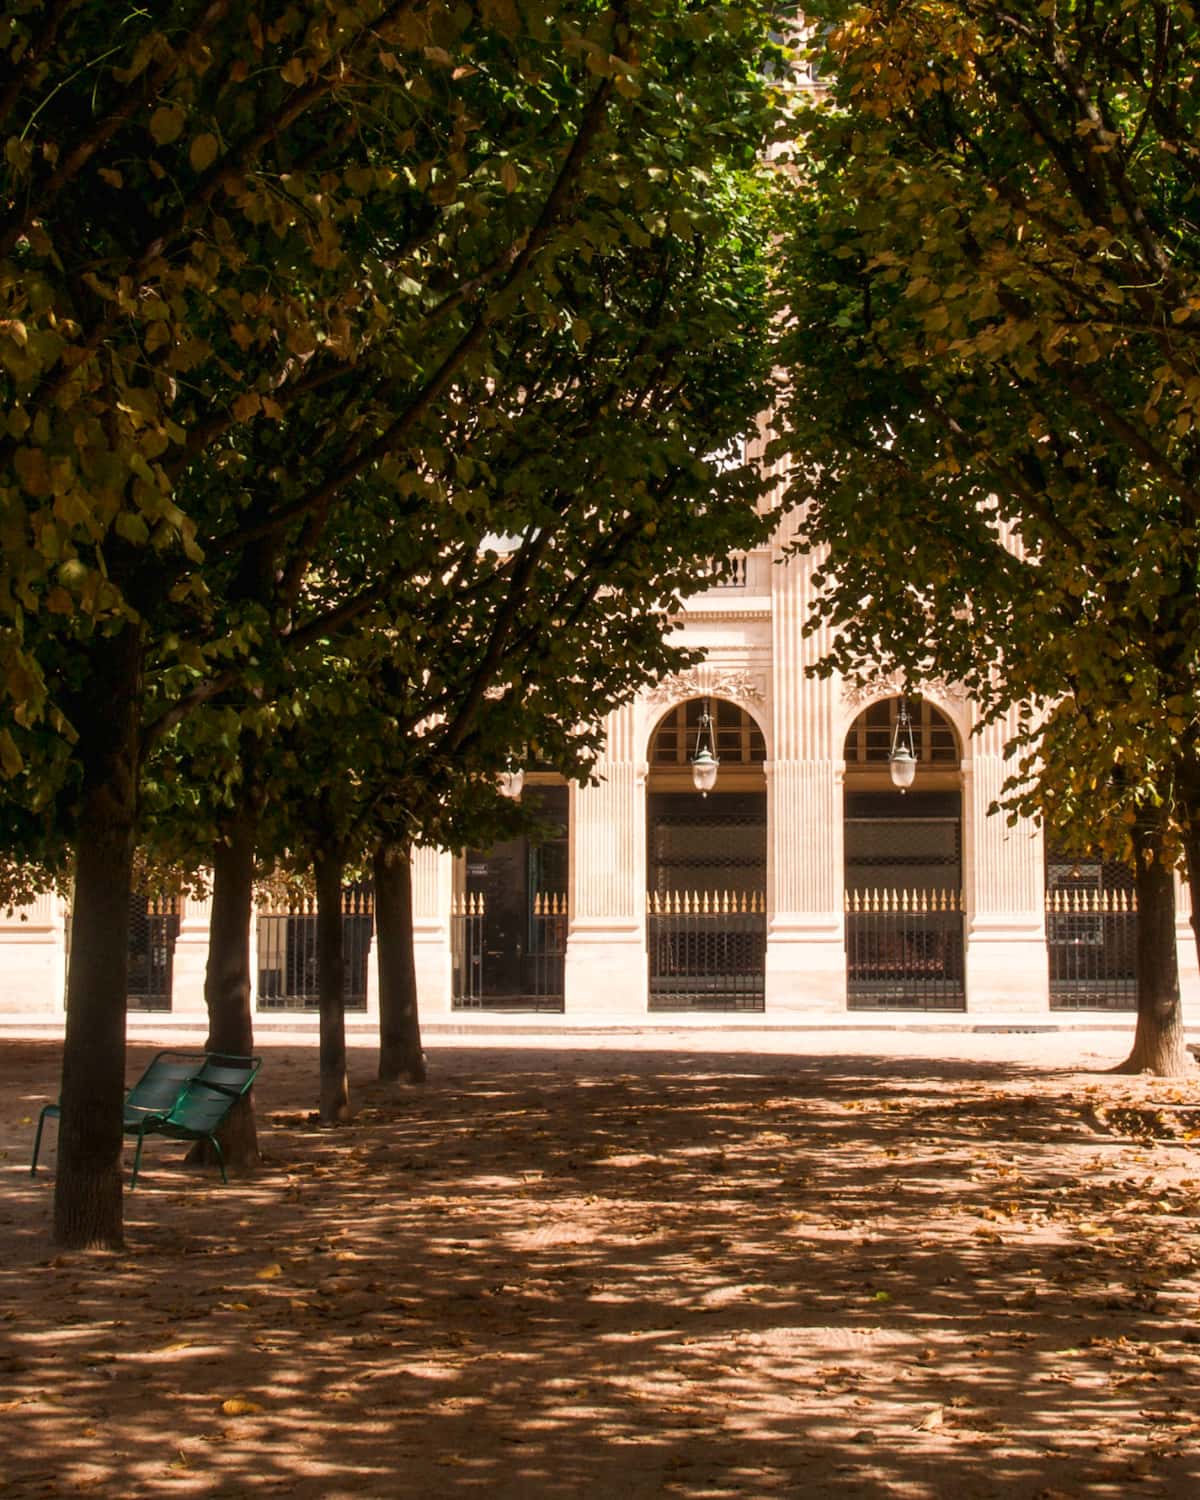 The Jardin du Palais Royal trees